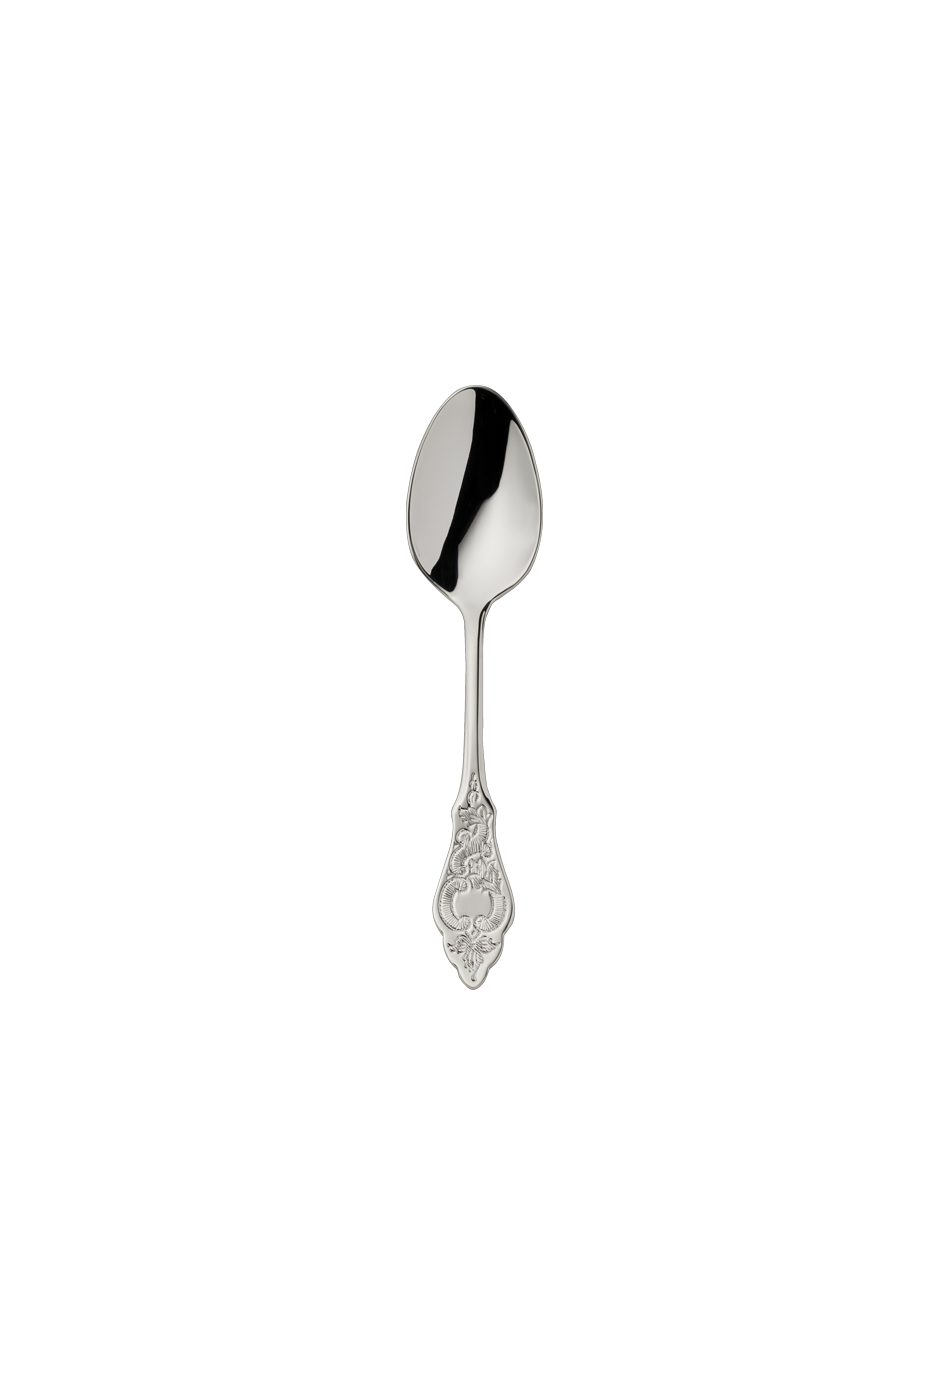 Ostfriesen Coffee Spoon 13,0 Cm (18/8 stainless steel)